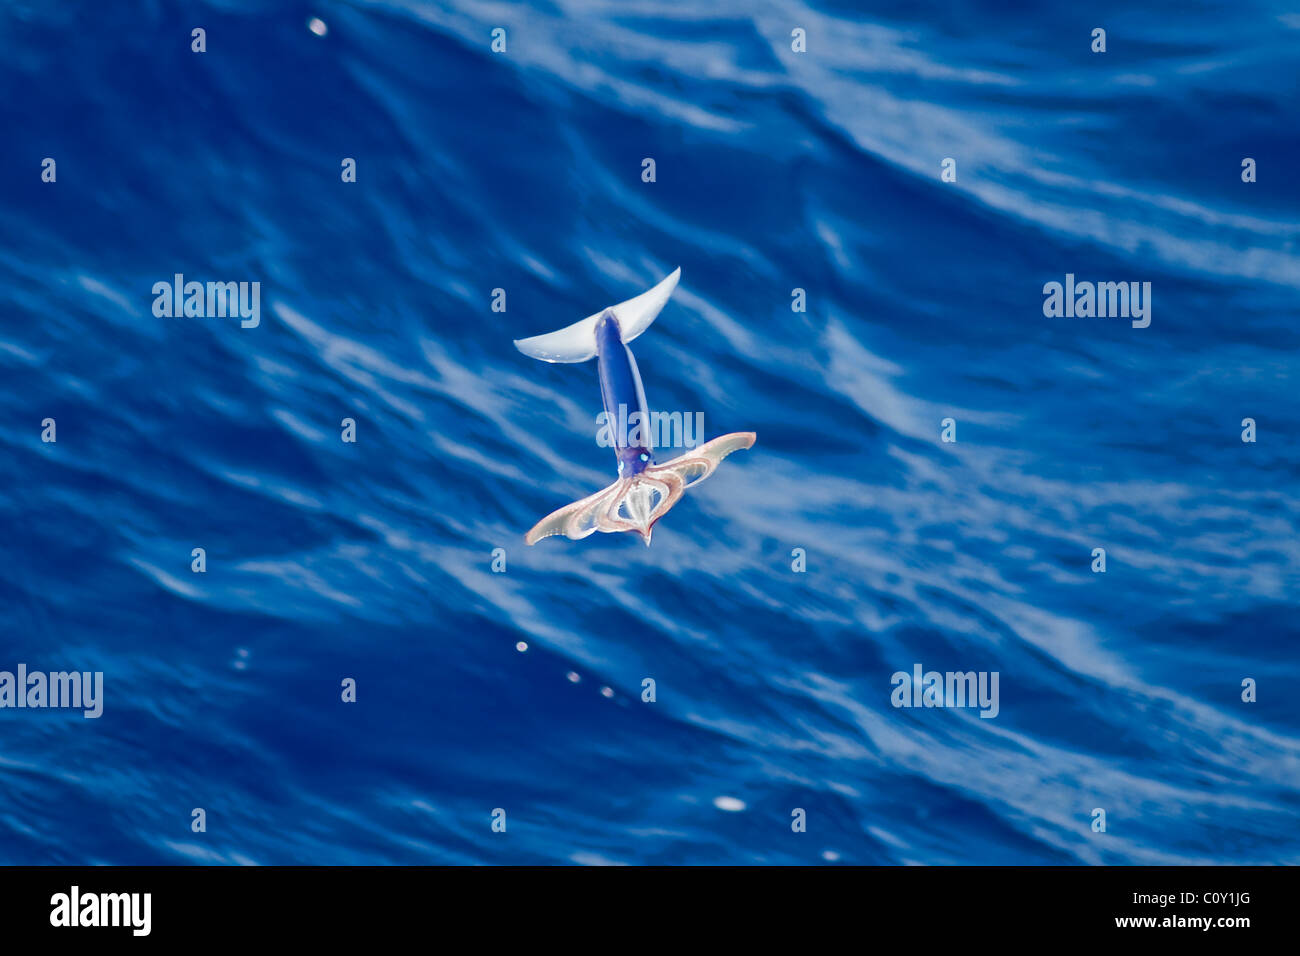 Très rare image d'une espèce de calmar volant néon (Ommastrephes bartramii) à la mi-air, l'océan Atlantique Sud. Banque D'Images